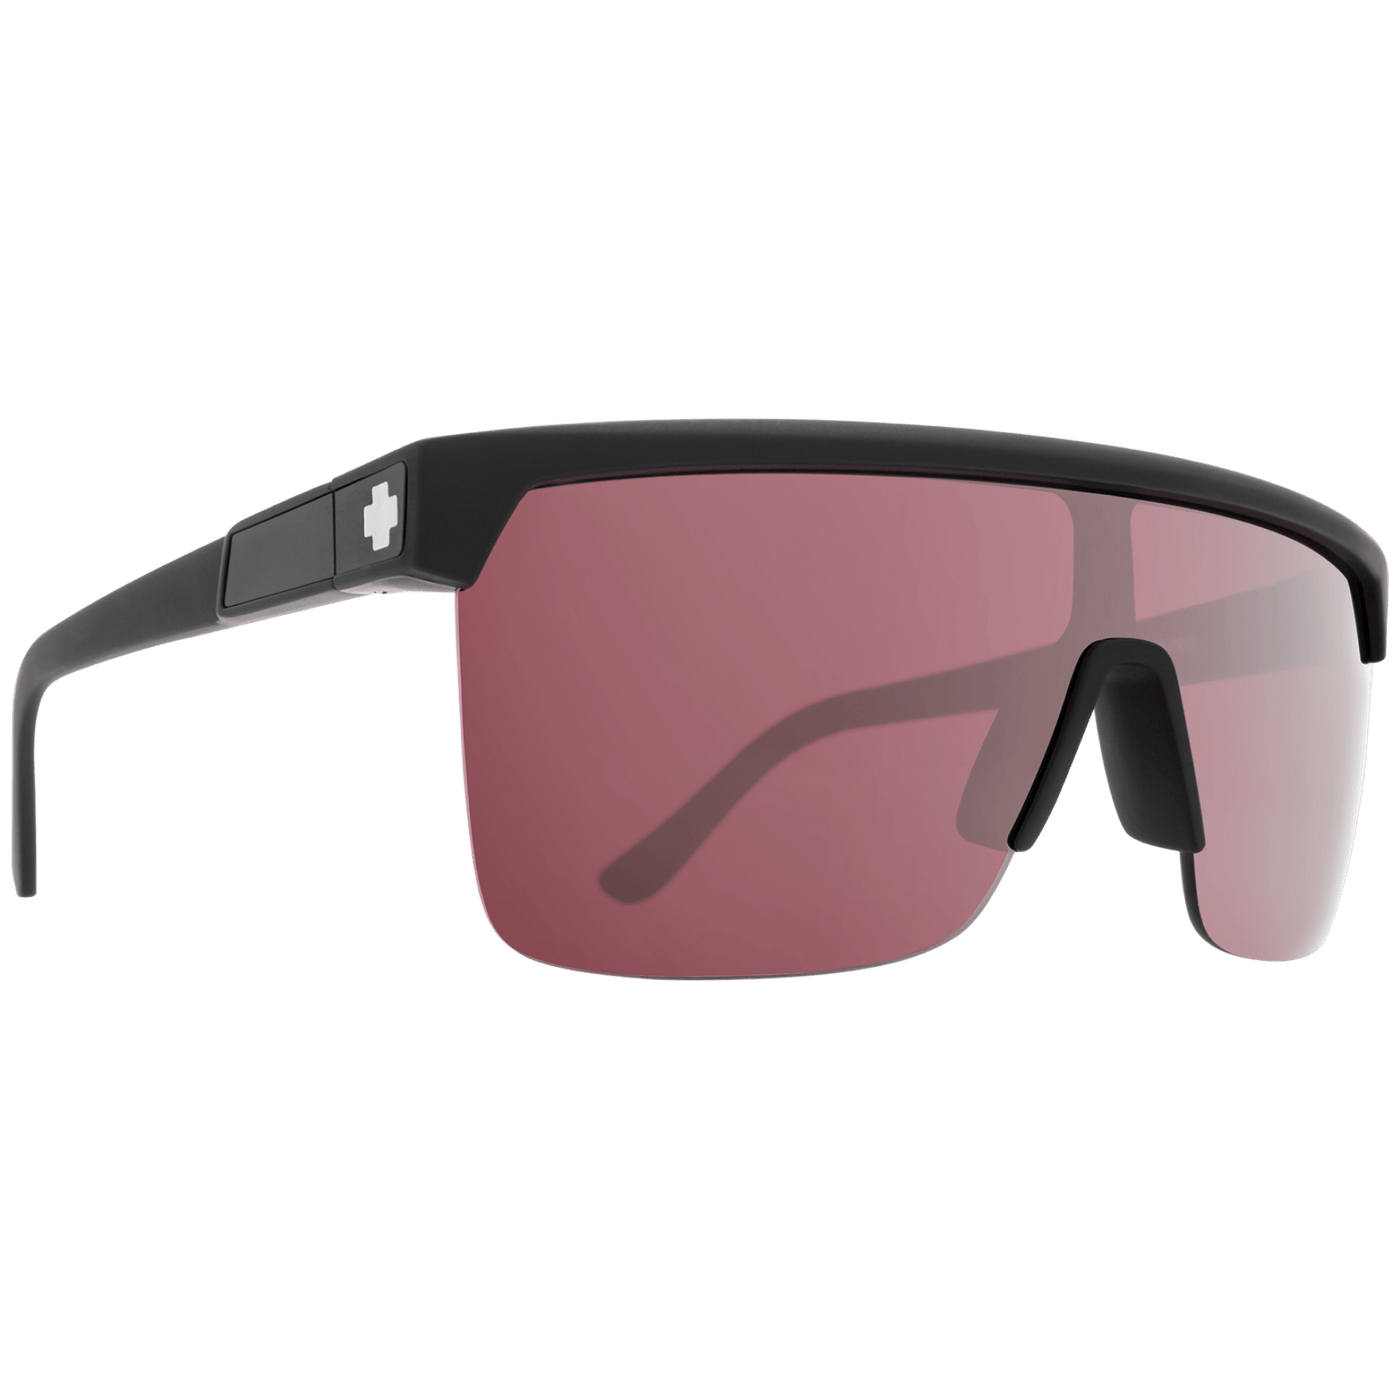 SPY FLYNN 5050 Sunglasses, Happy Lens - Rose 8Lines Shop - Fast Shipping